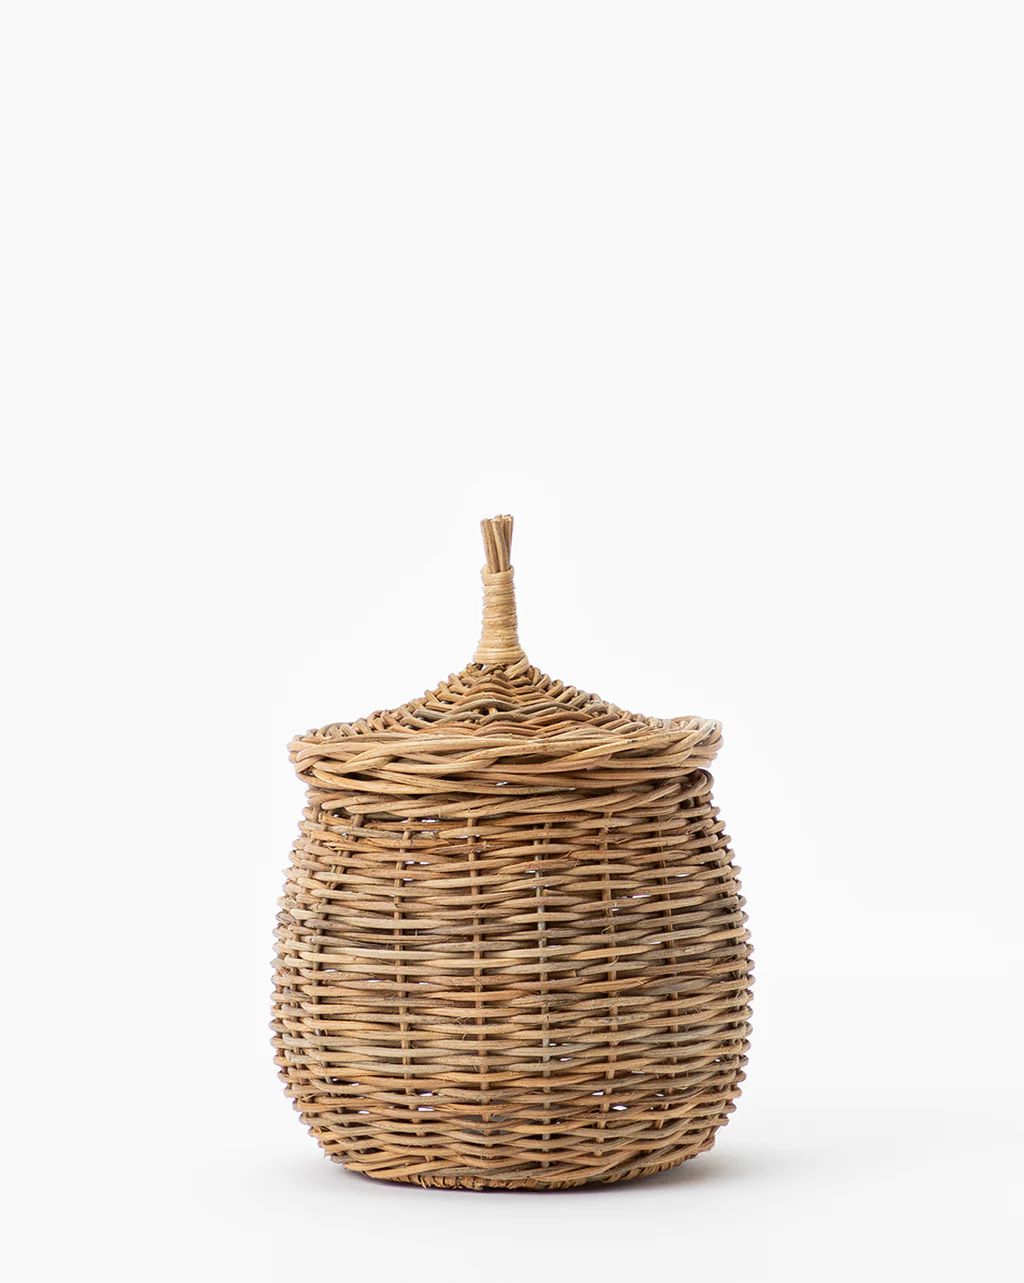 Woven Lidded Basket | McGee & Co.